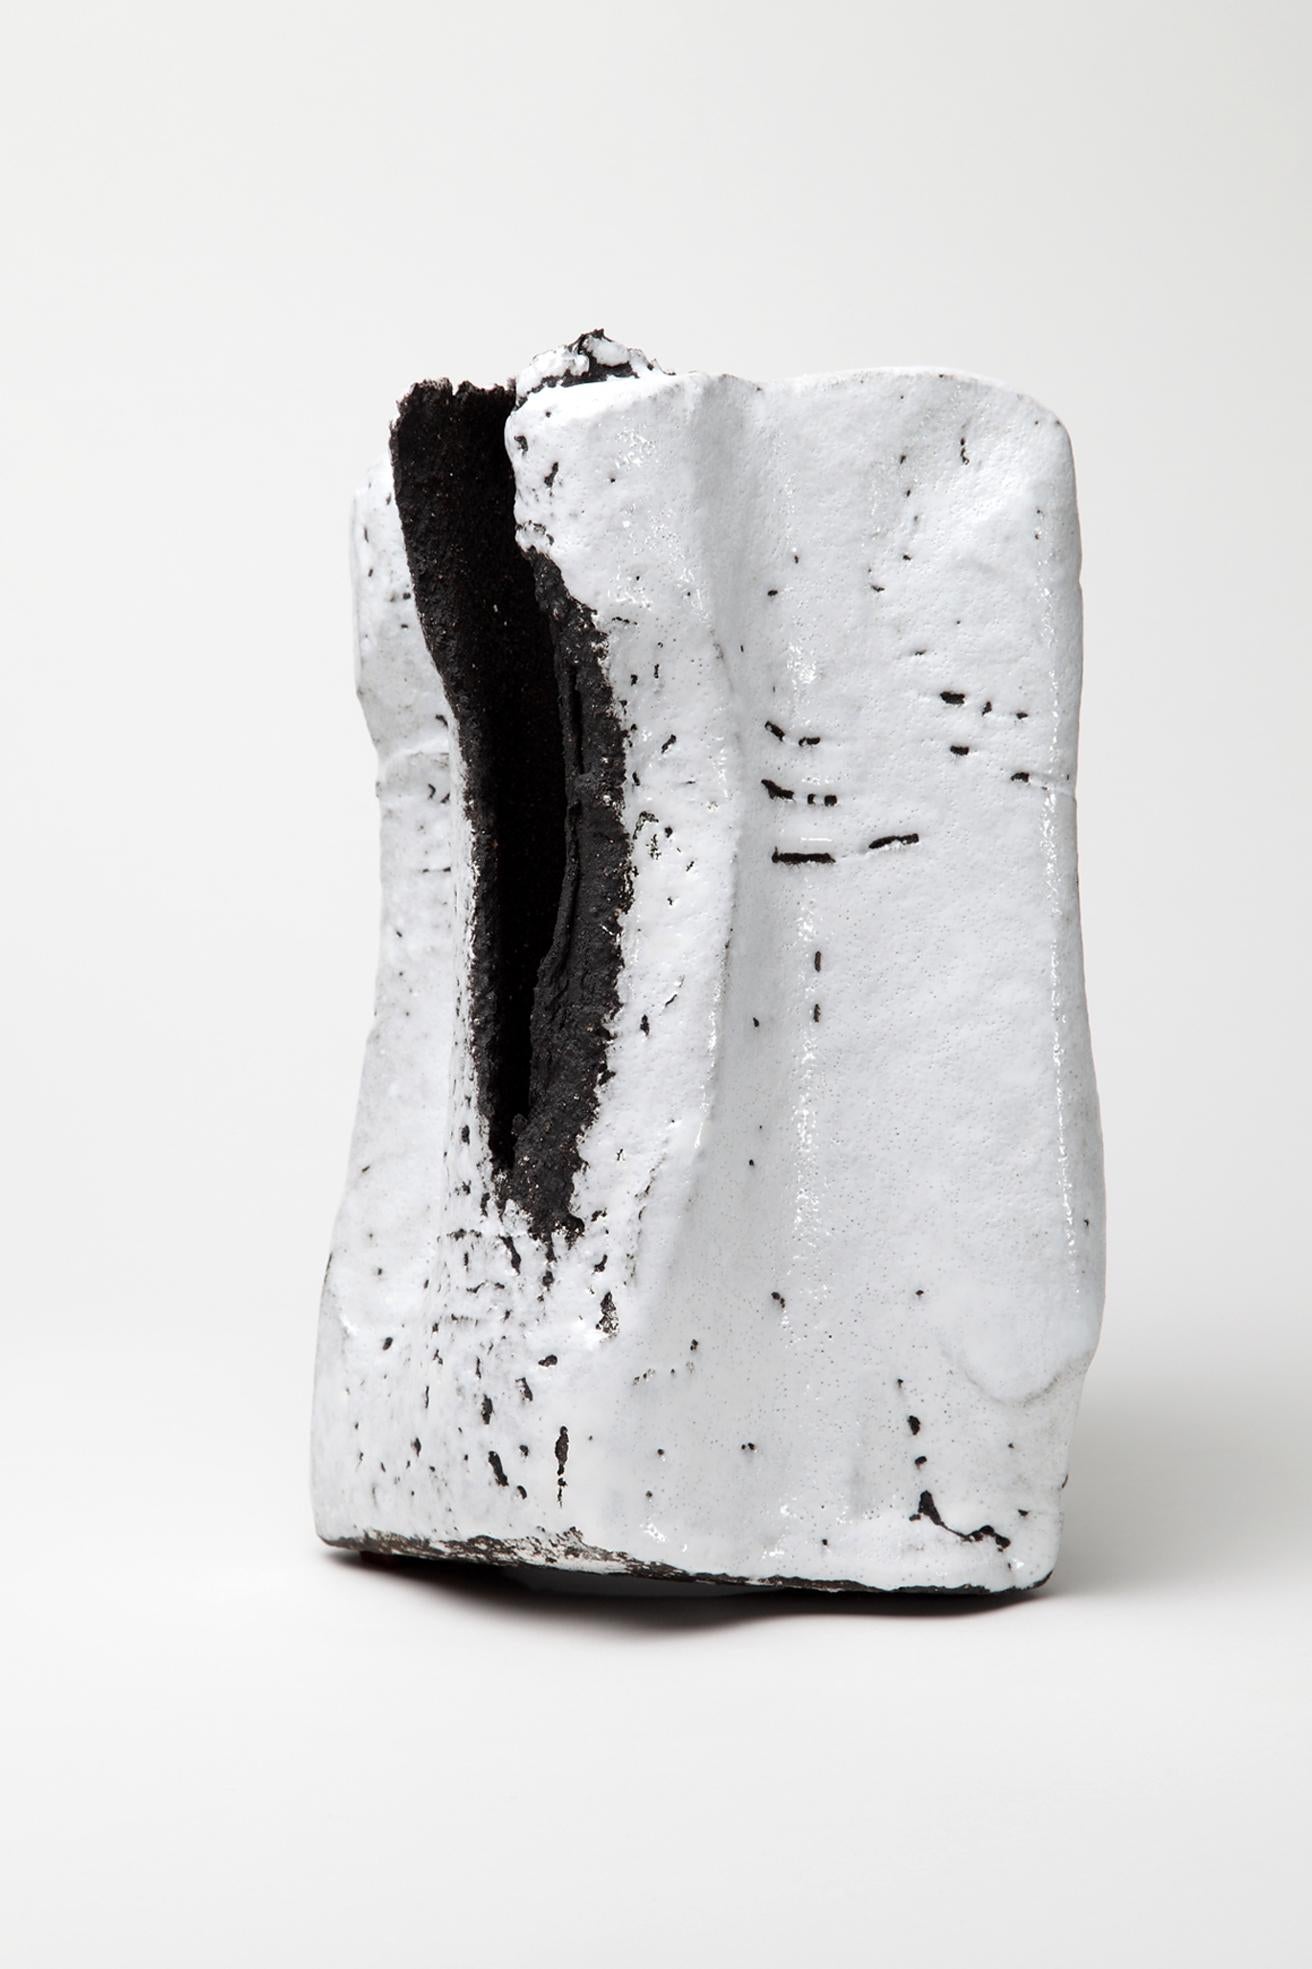 Karine Benvenuti Abstract Sculpture - Untitled 